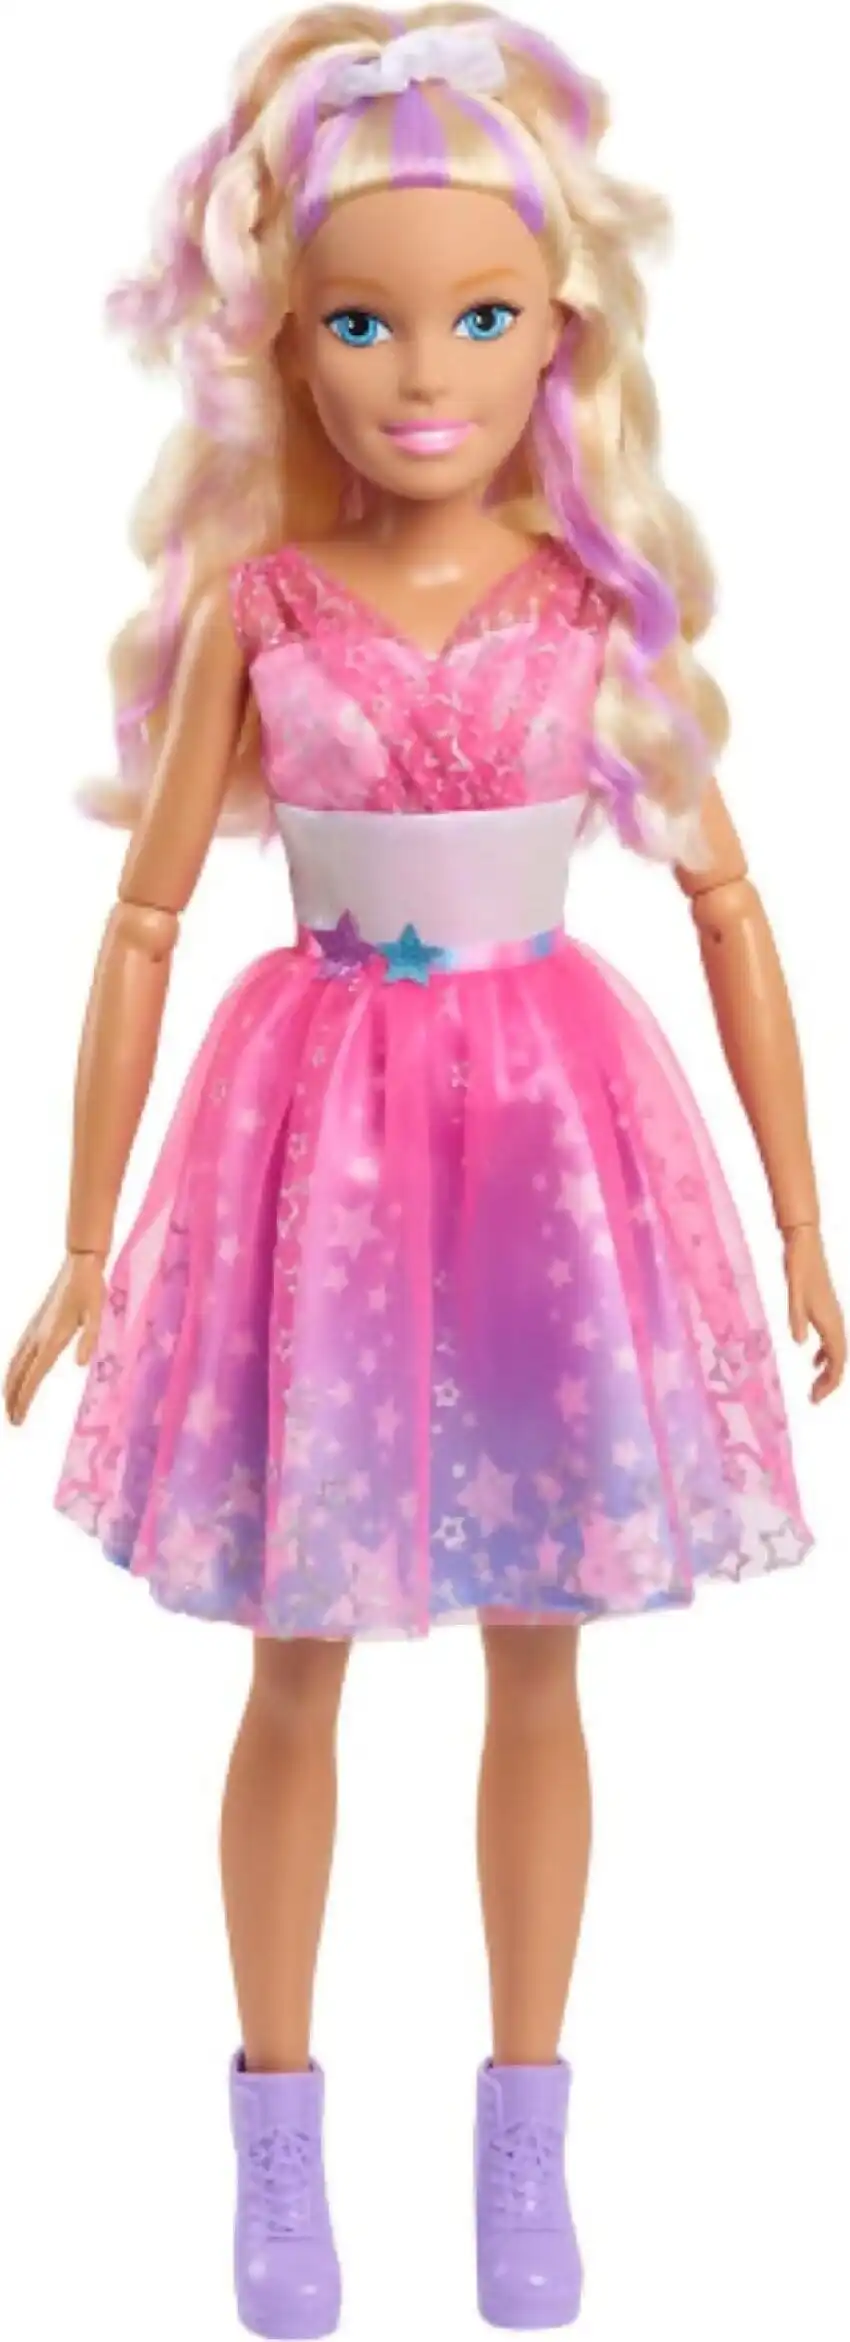 Barbie - Star Power Best Fashion Friend Blonde Fashion Barbie Doll 28-inch (71cm) - Mattel